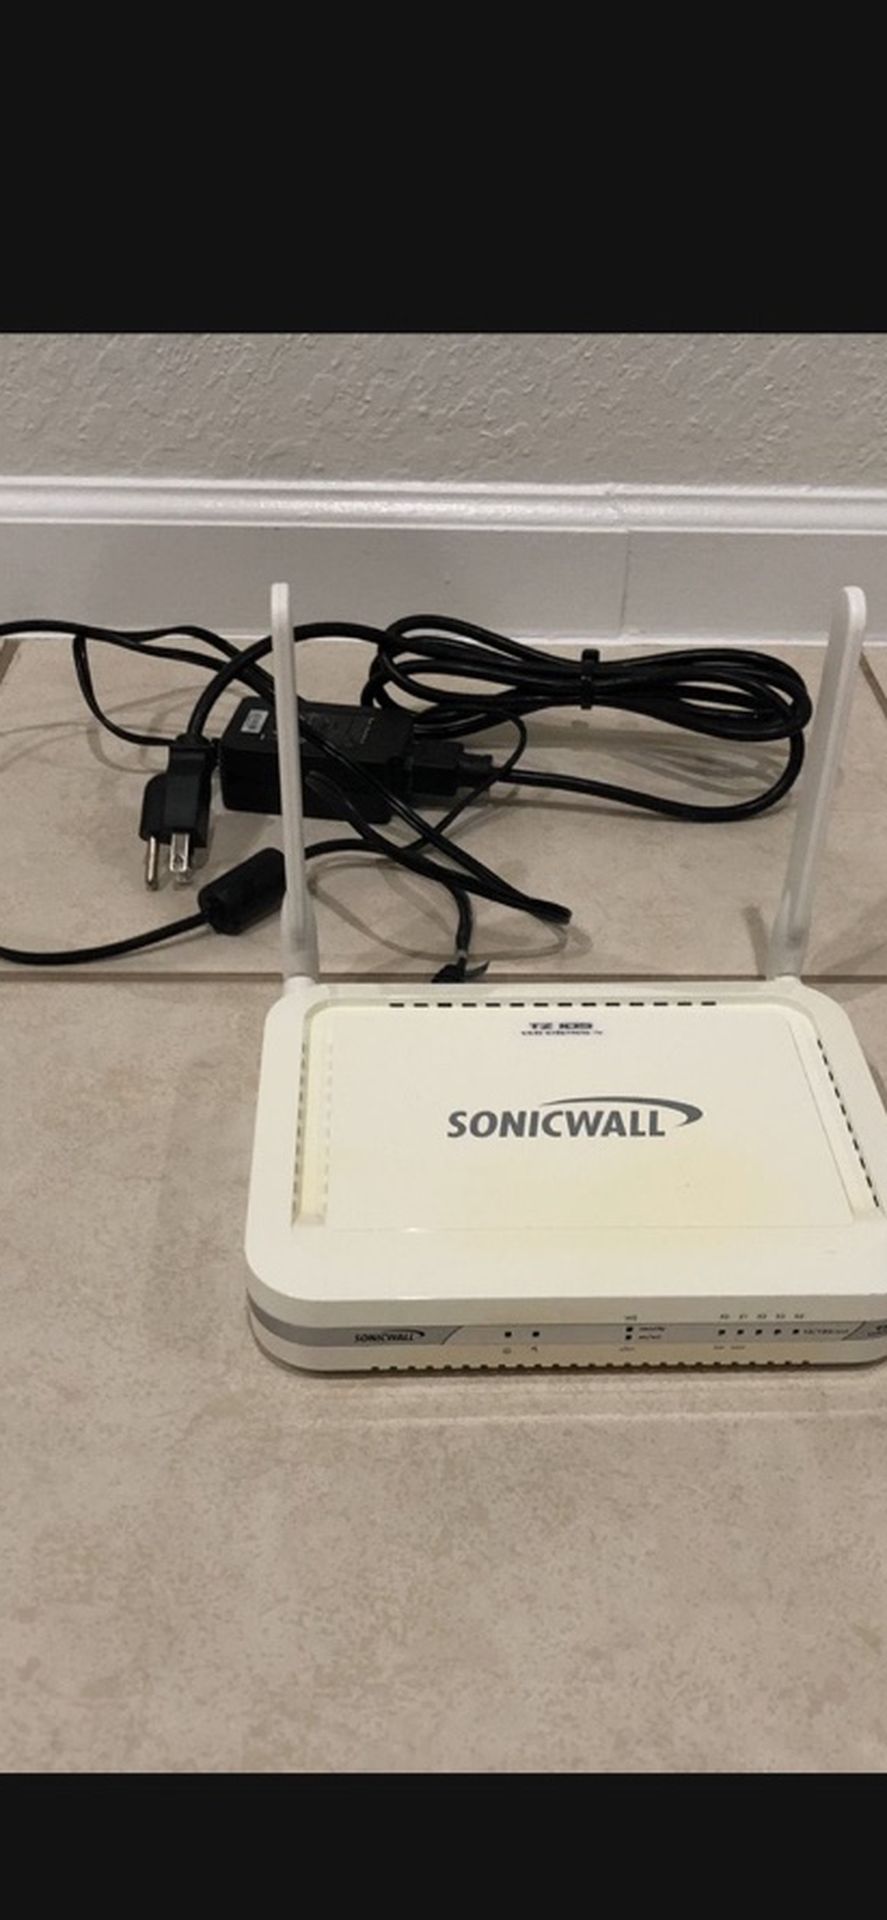 Sonicwall TZ 105 Router Firewall